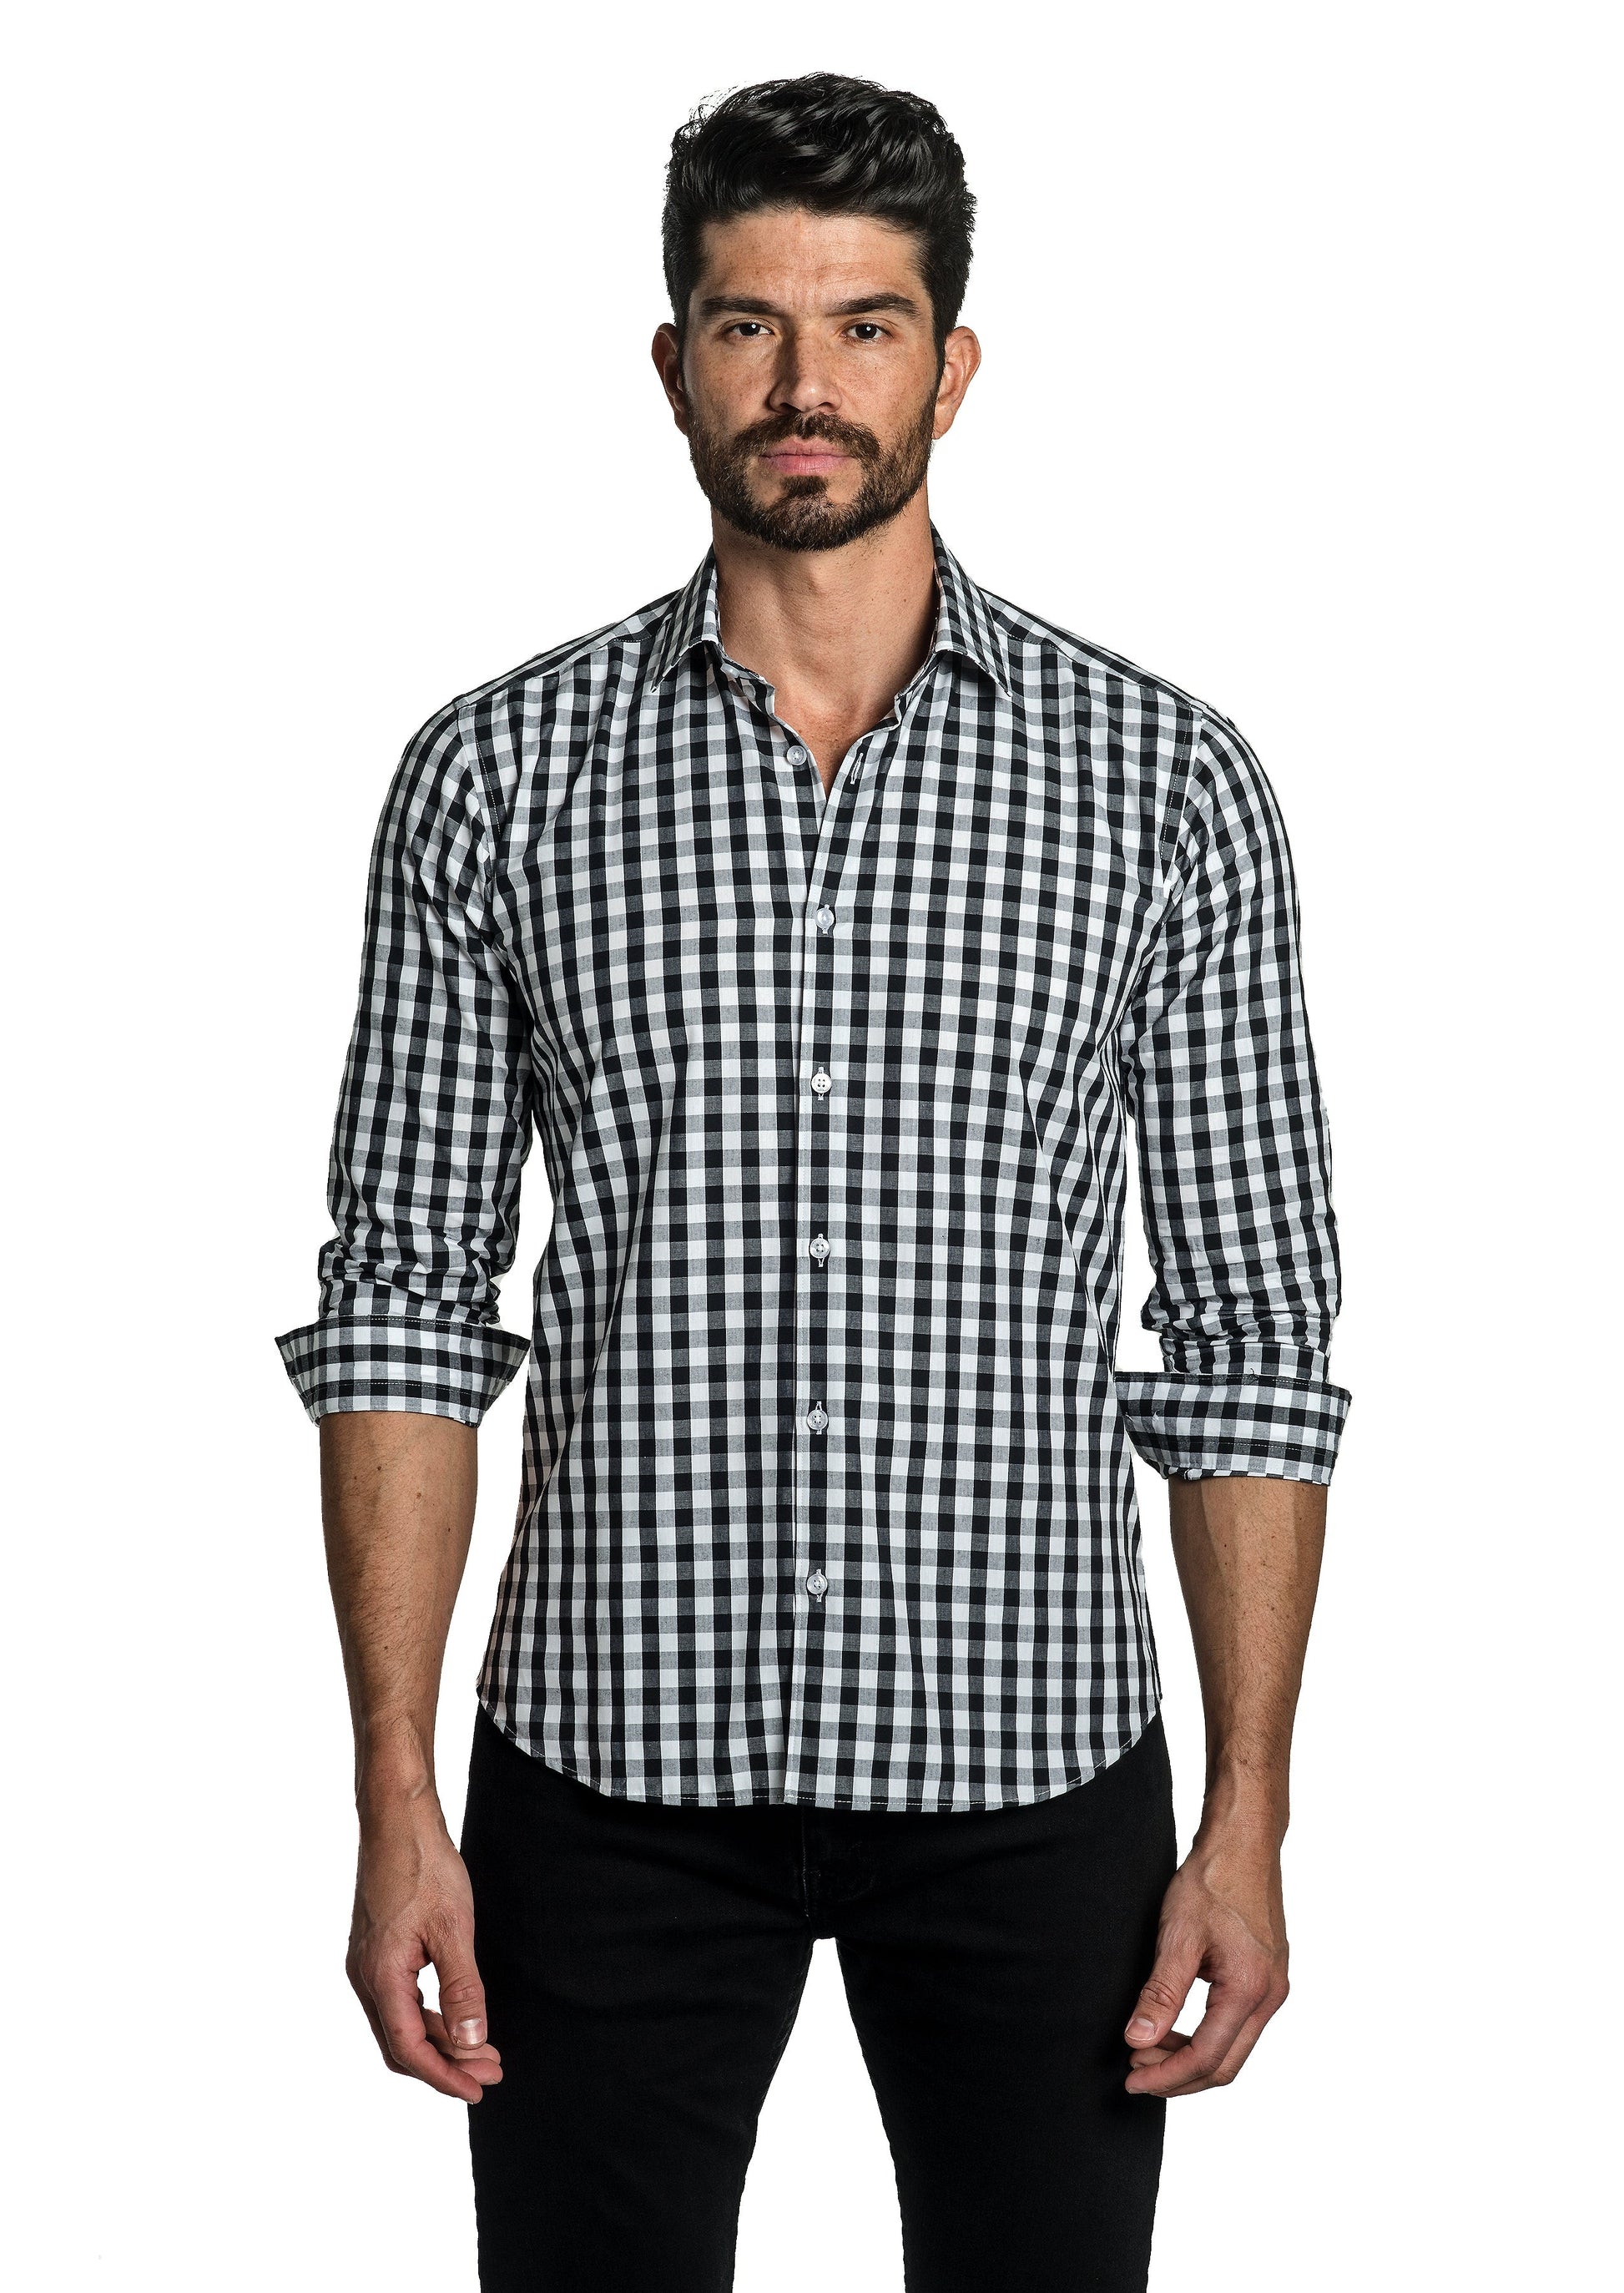 White + Black Long Sleeve Shirt T-6773 Front